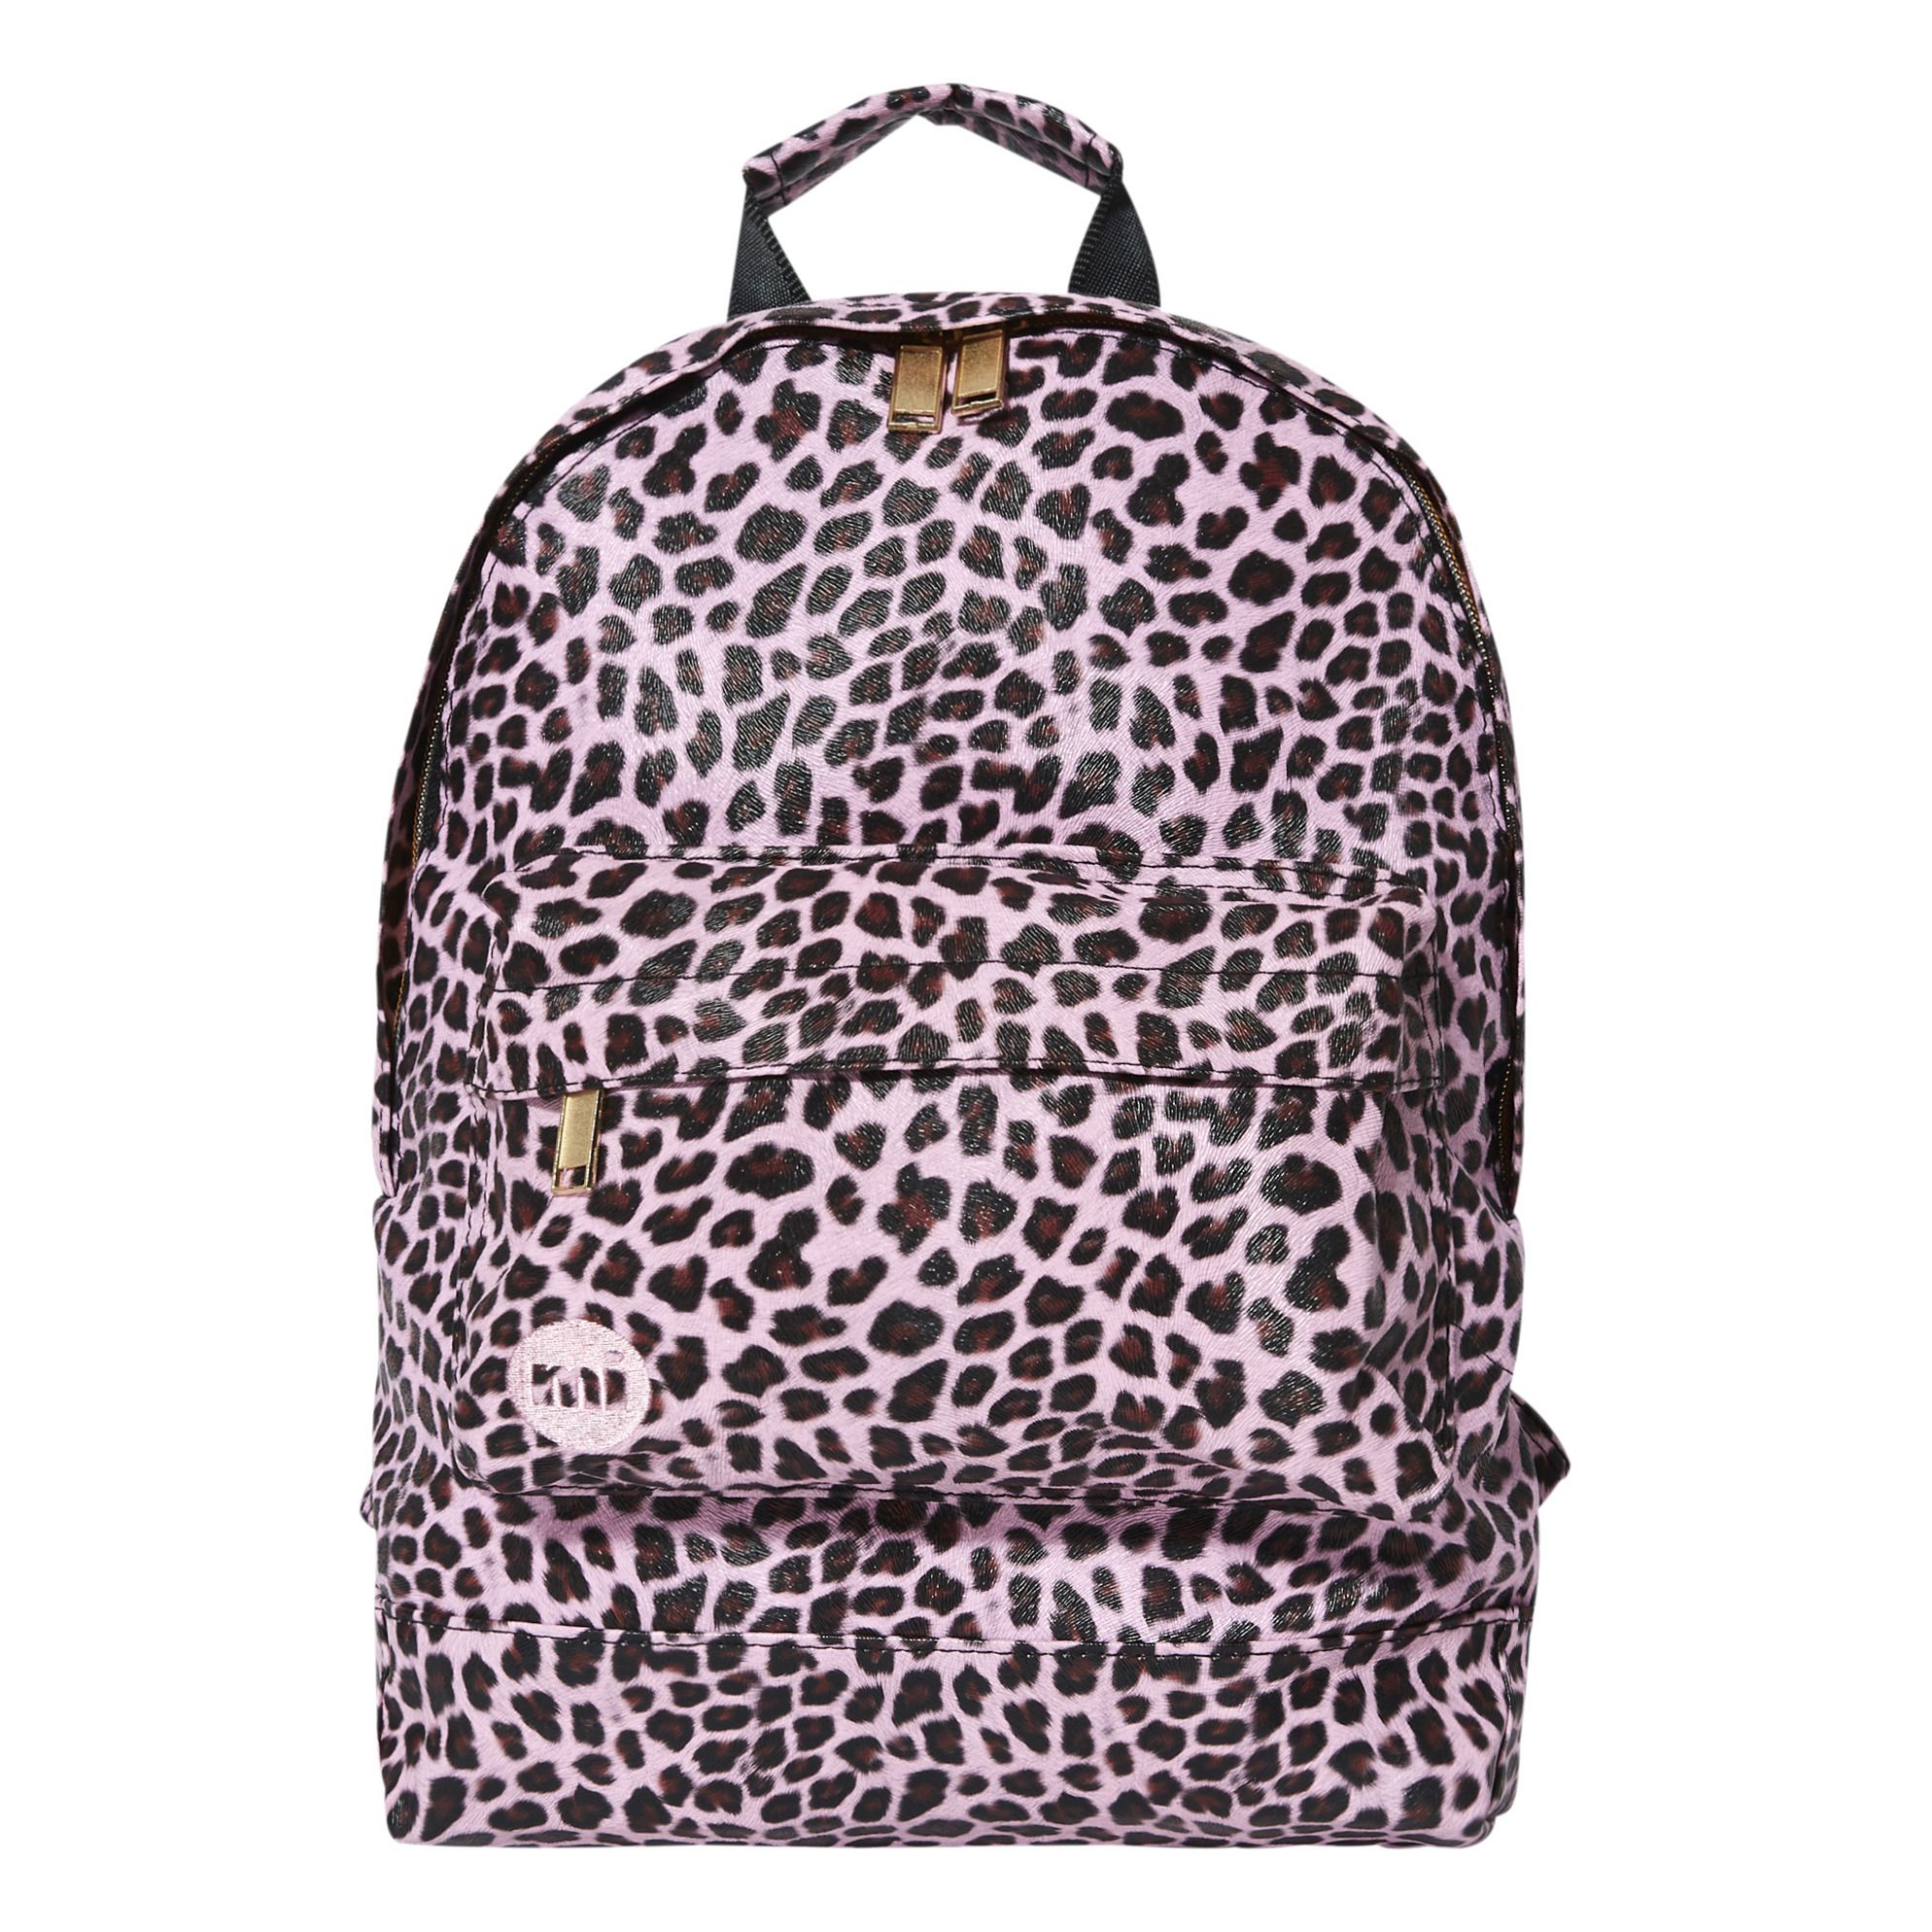 Mi-Pac - Sac Mini Backpack - Fille - Rose pâle